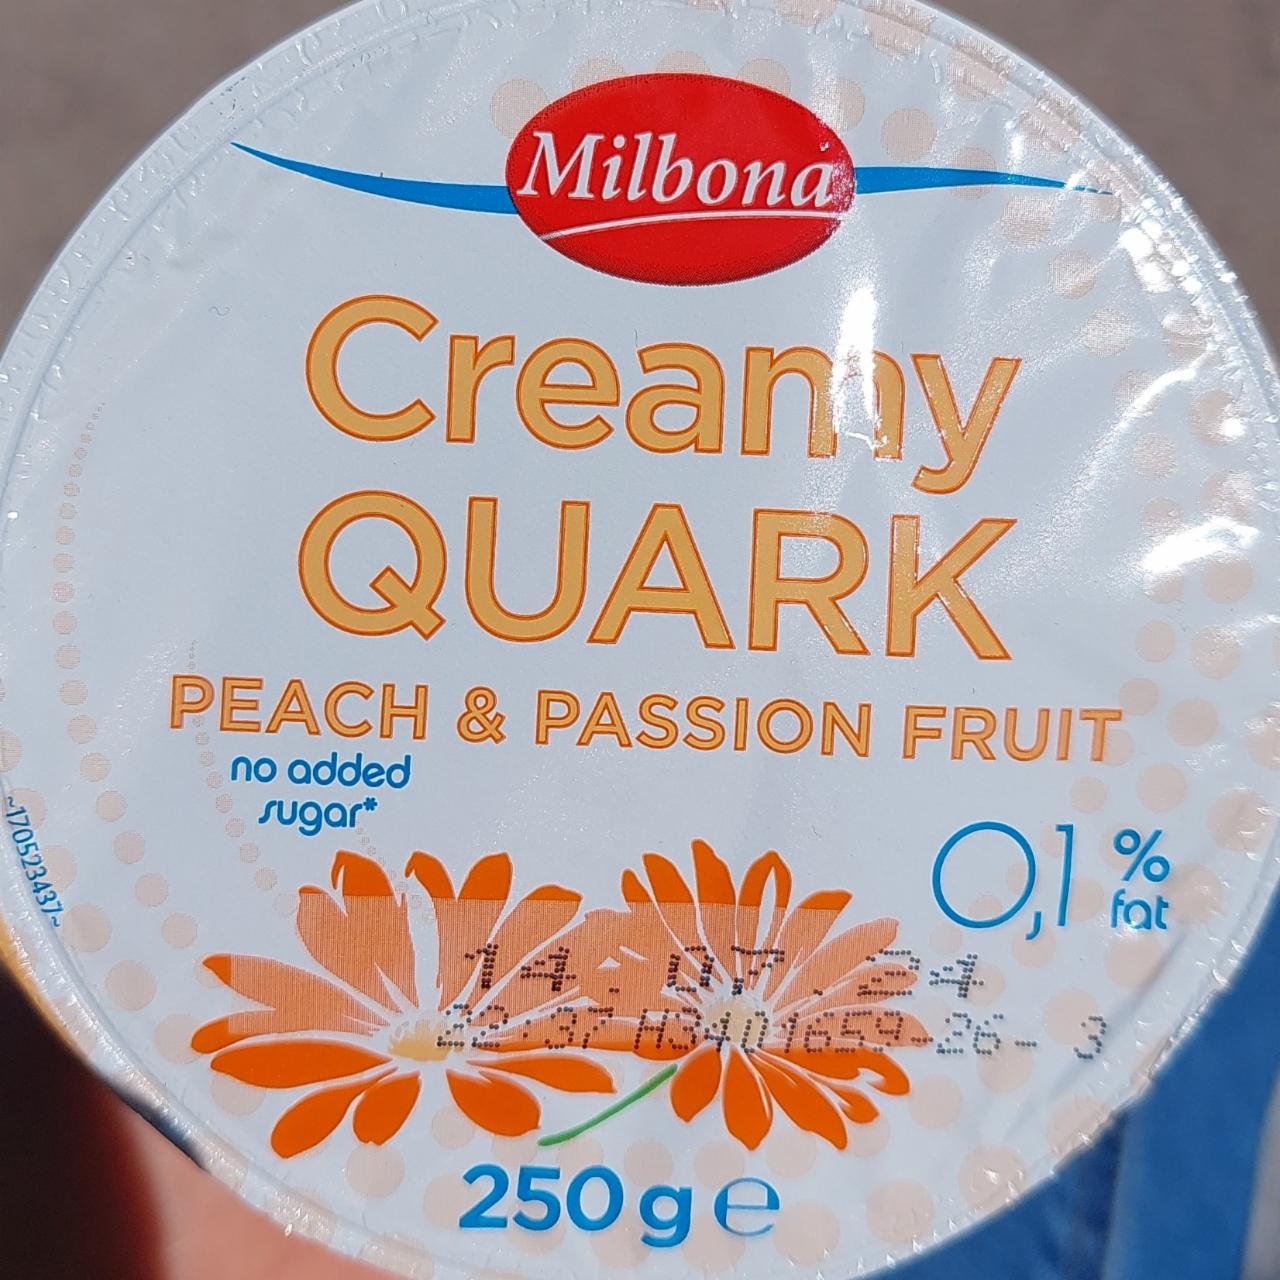 Fotografie - Creamy quark peach & passion fruit Milbona